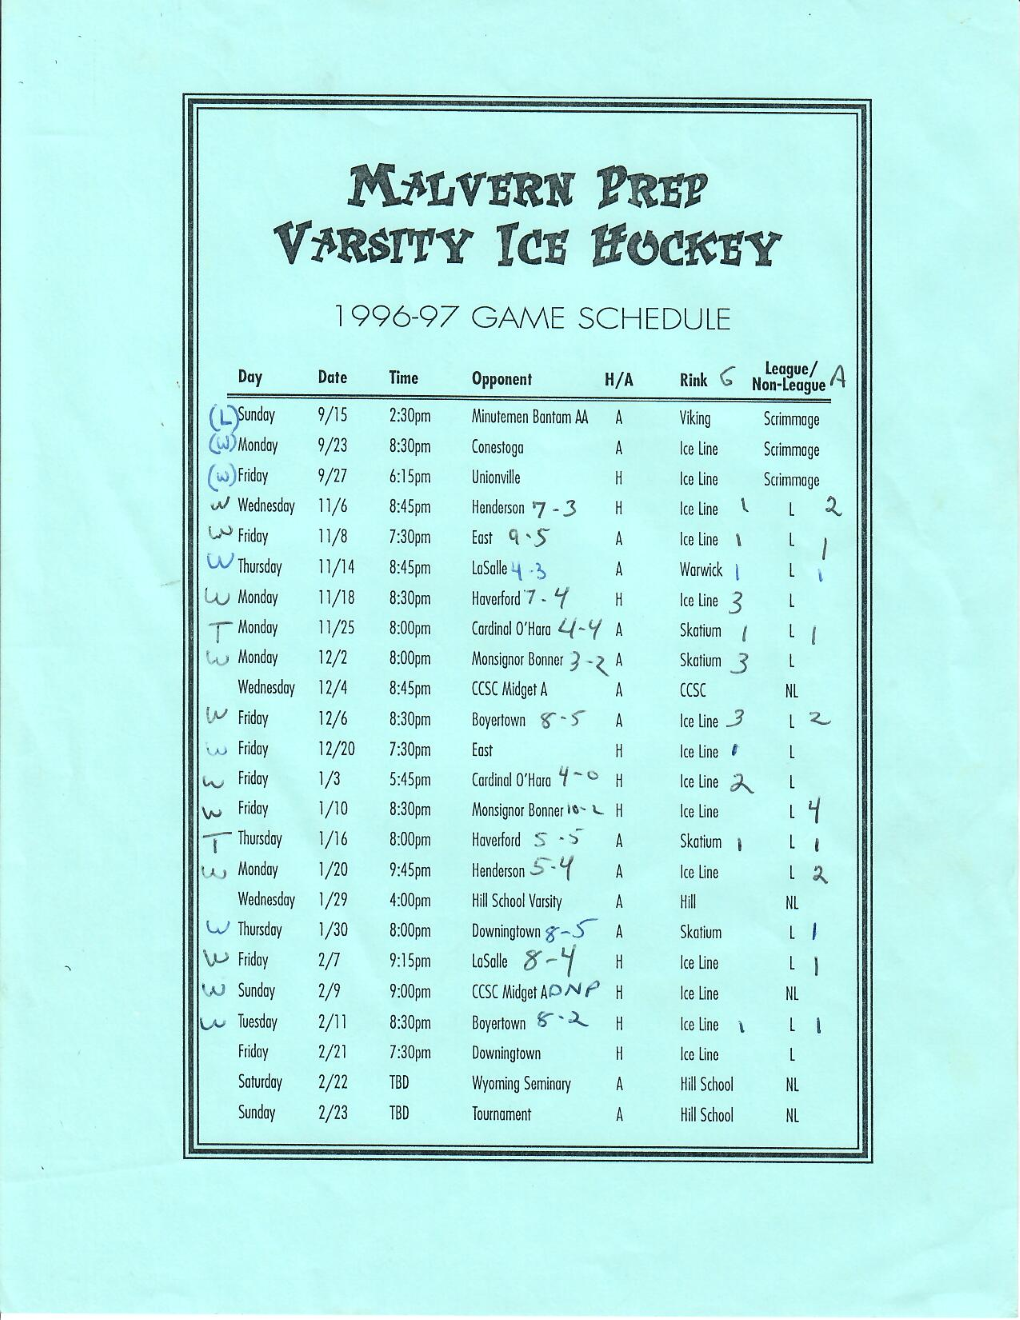 1997 Malvern Prep Friars Ice Hockey History